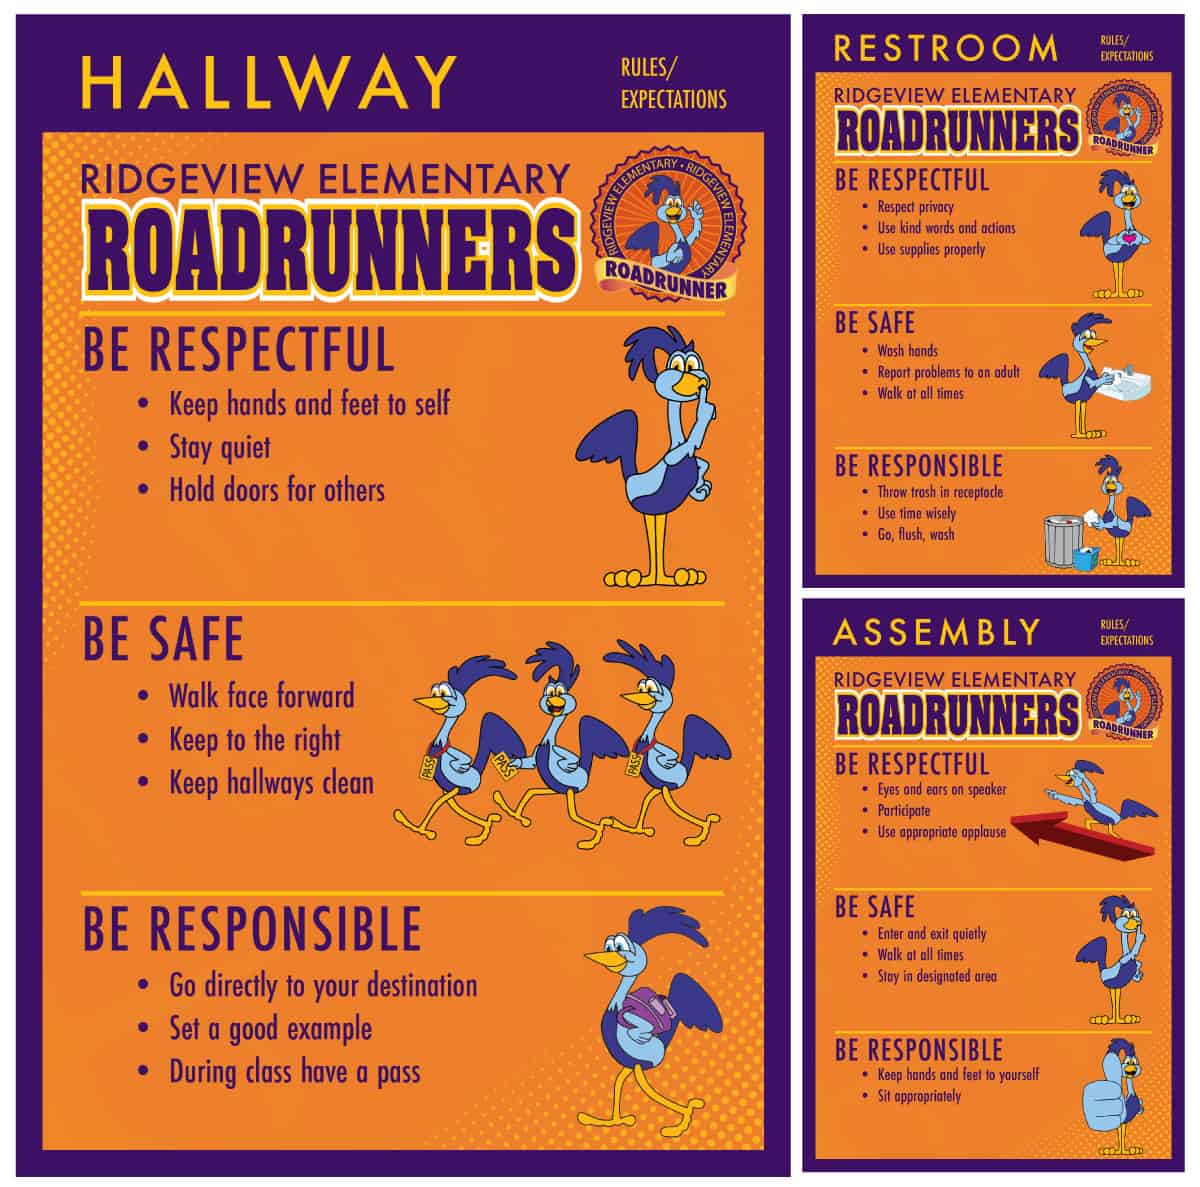 Rules-posters_Roadrunner